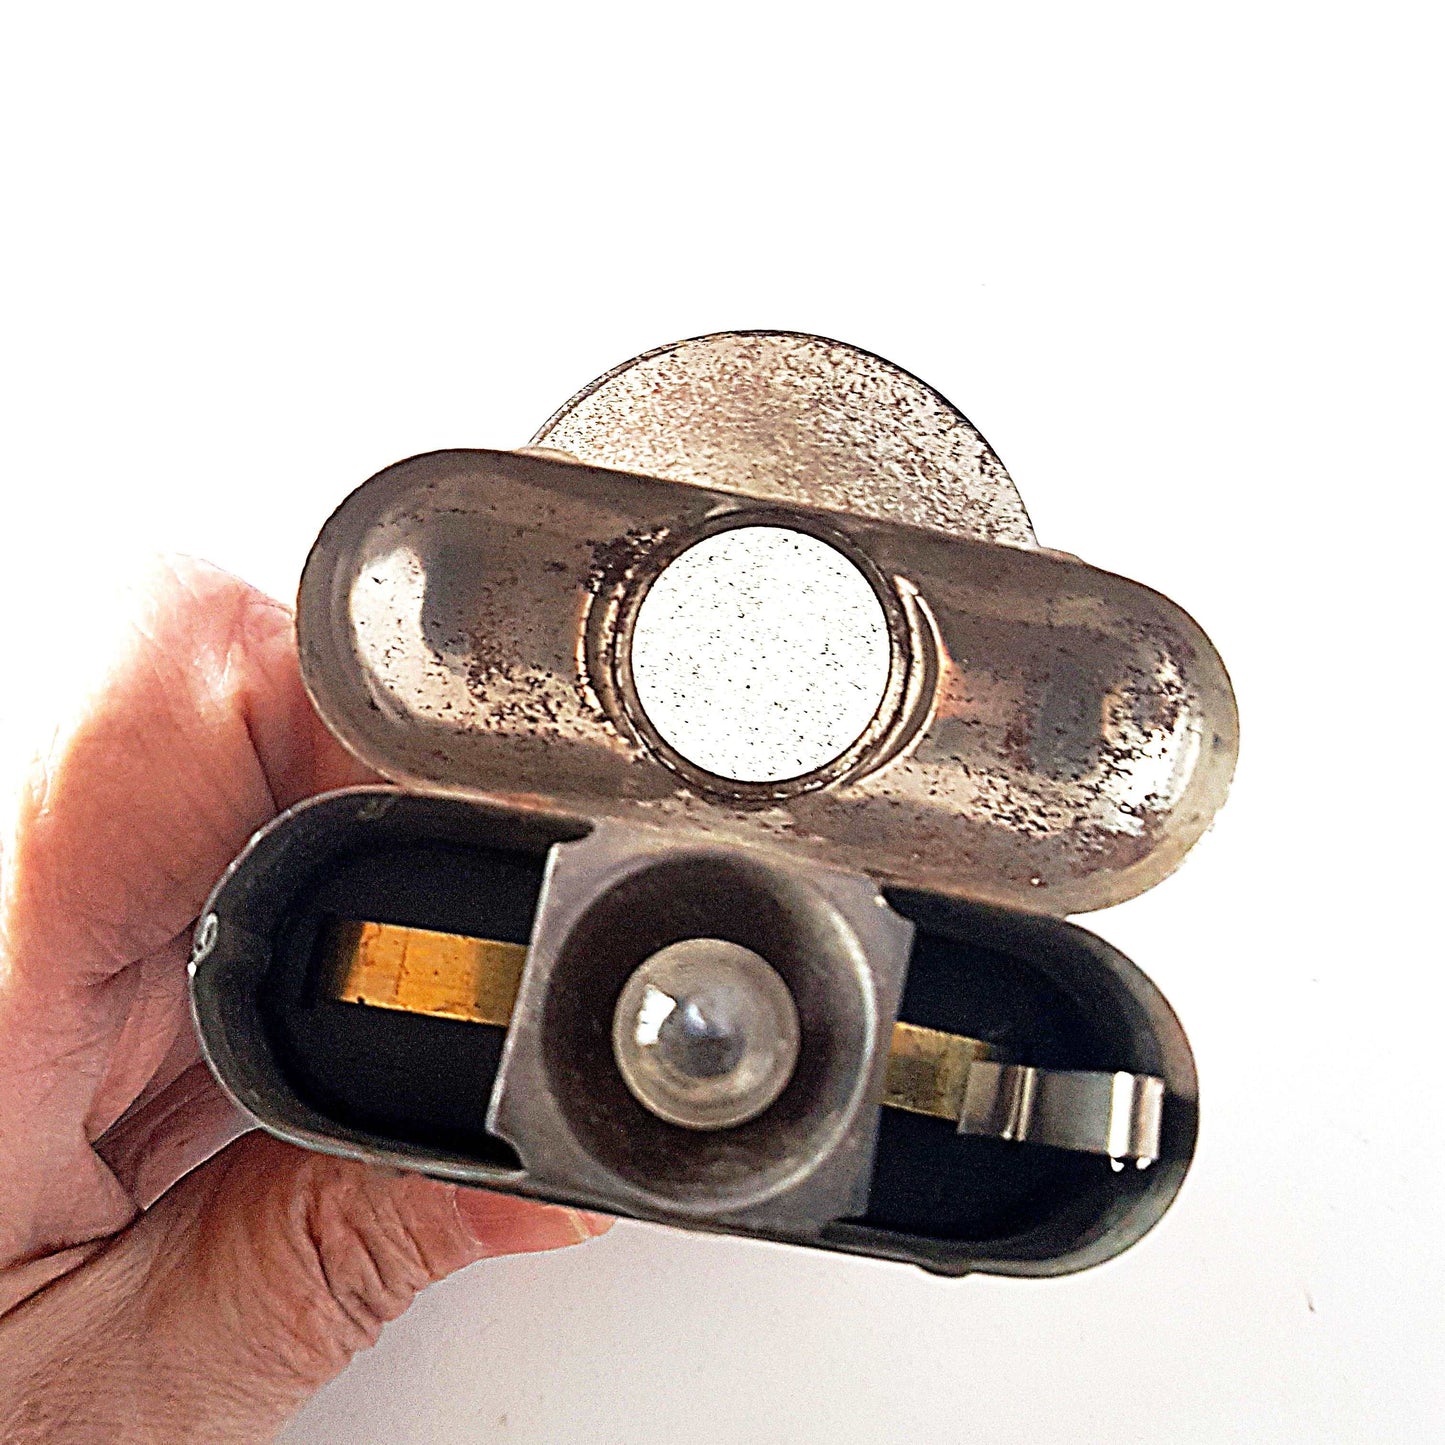 Antique vintage metal flashlight. German fisheye lens pocket torch. Metallic Art Deco case cover design. Not in working order. Collectible.